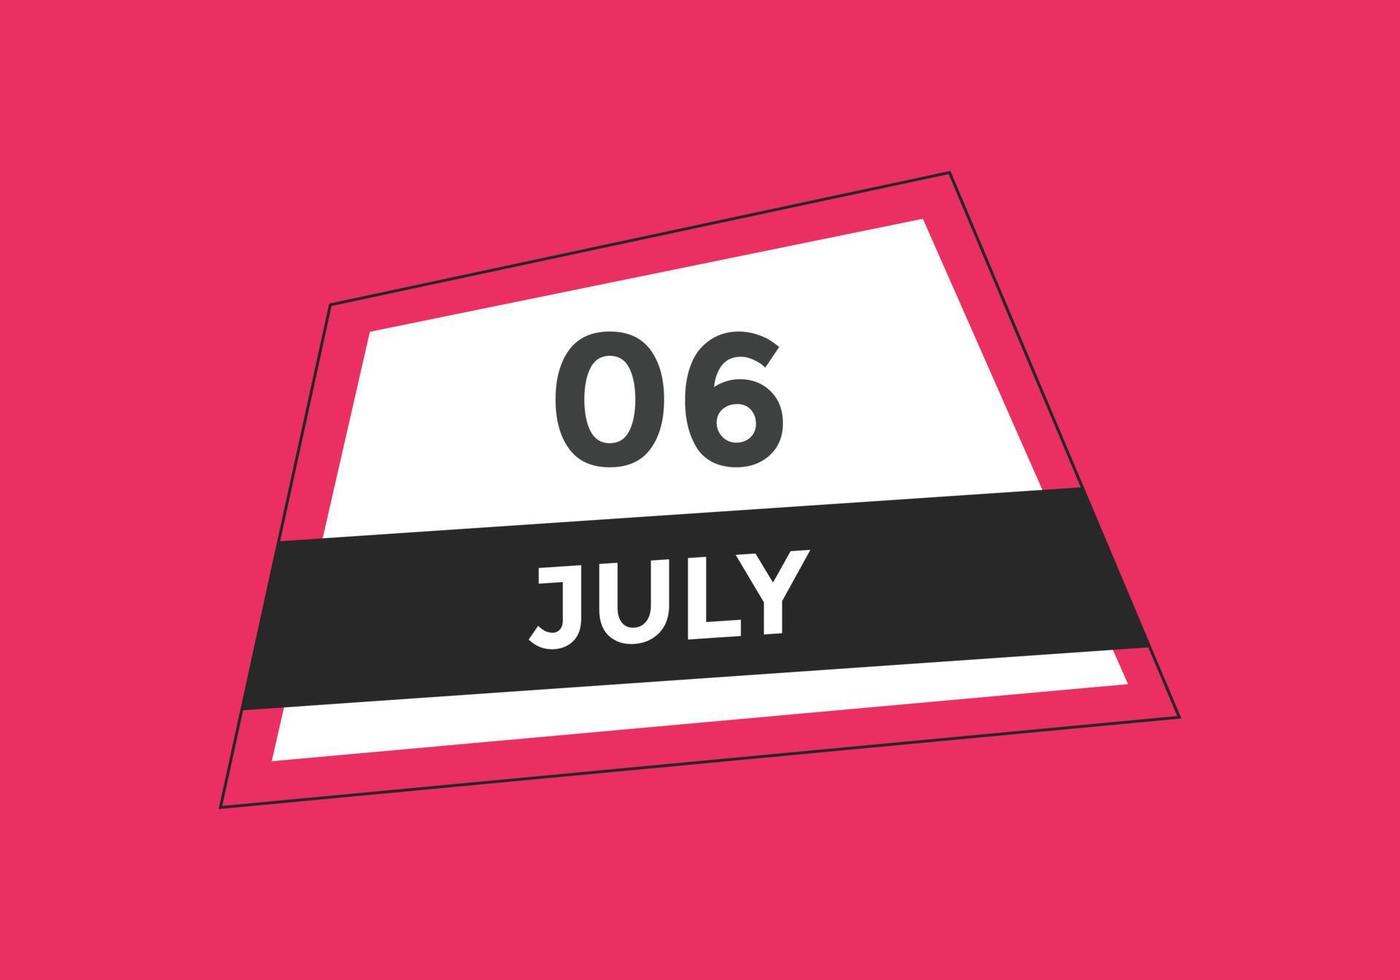 july 6 calendar reminder. 6th july daily calendar icon template. Calendar 6th july icon Design template. Vector illustration